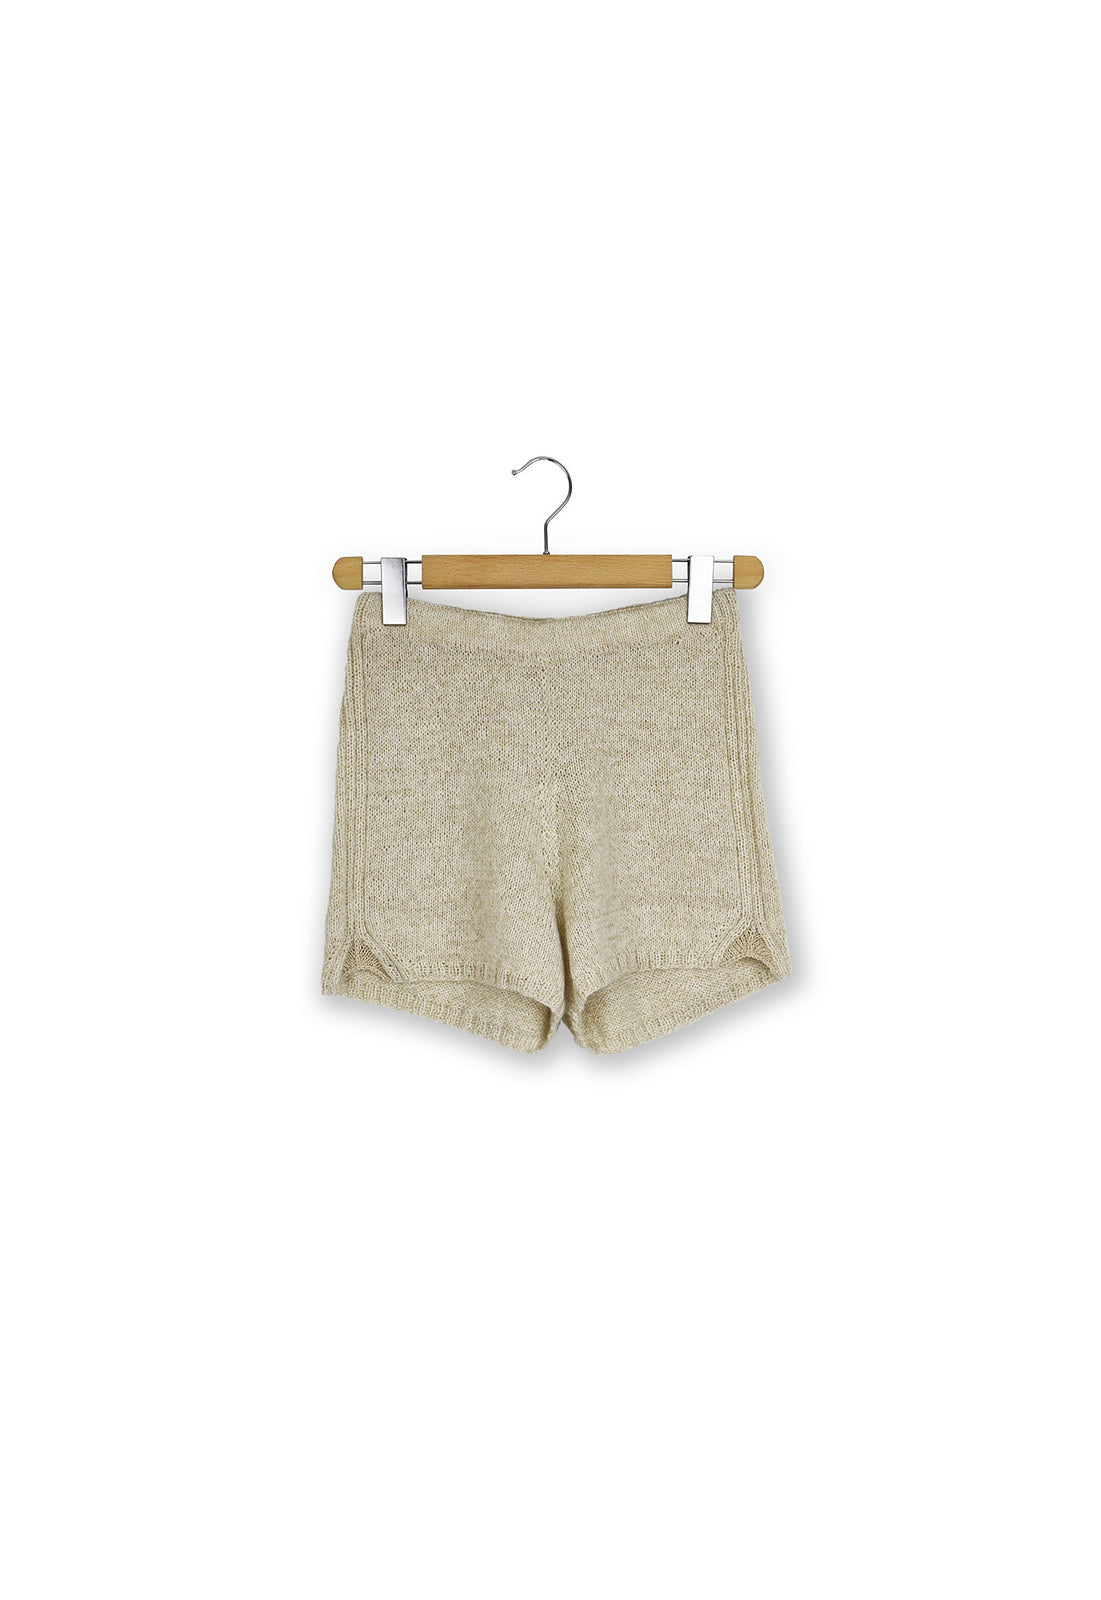 Tan Top or Shorts キット（印刷版日本語文章パターン付き）